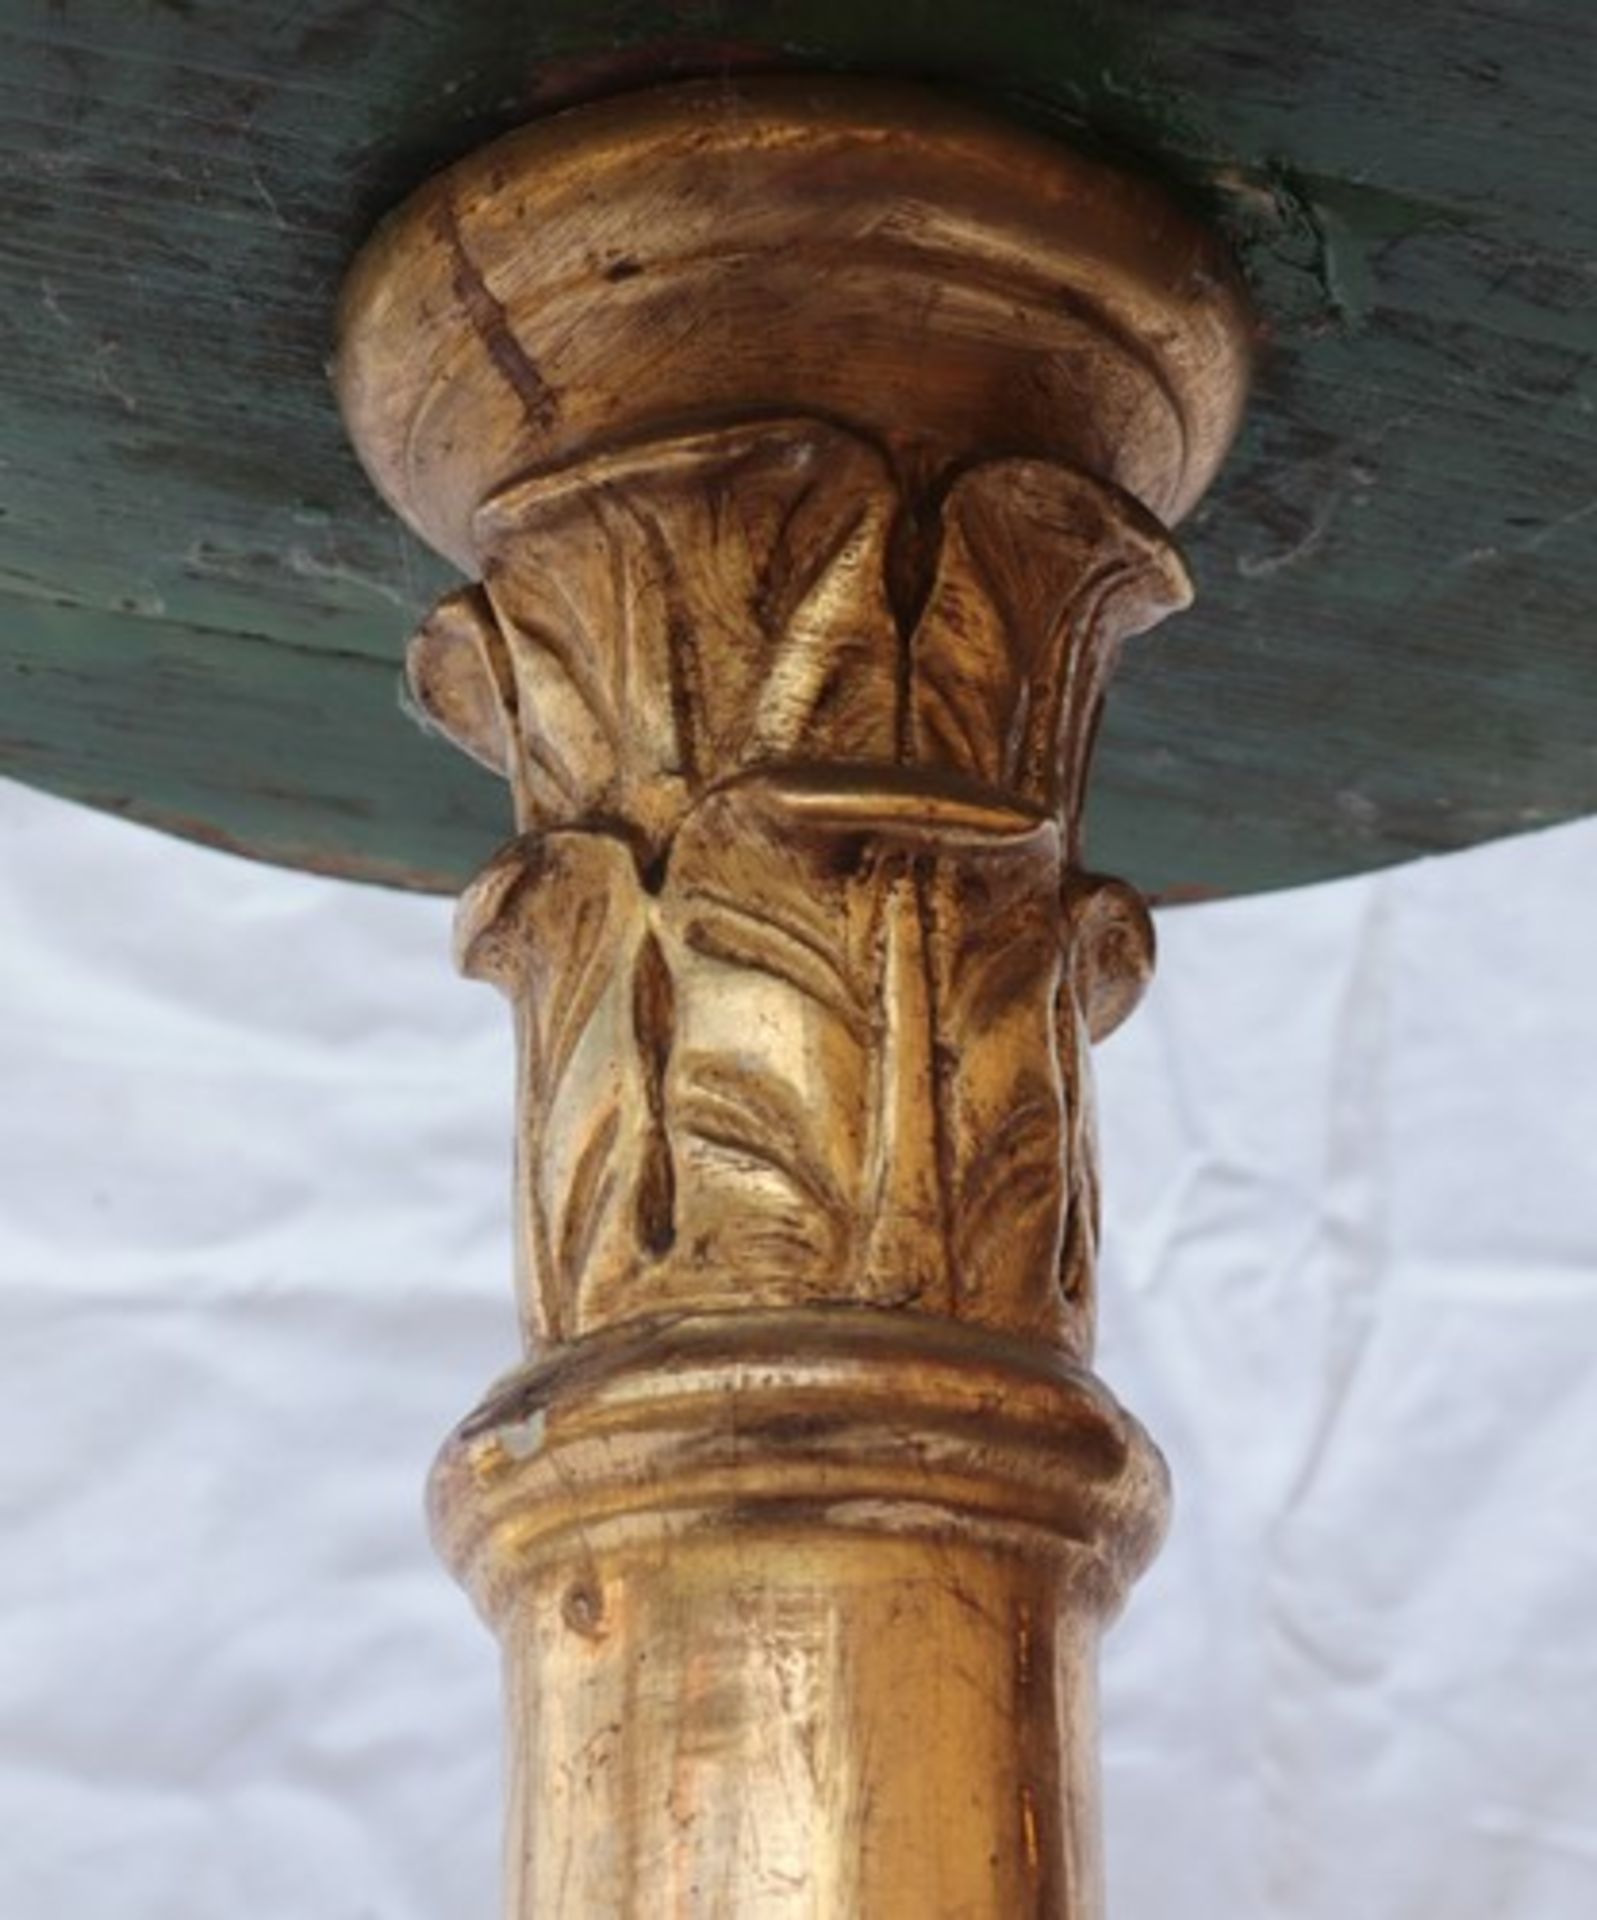 Blumensäule18./19. Jh., Holz, geschnitzt, vergoldet, grün bemalt, oktogonaler, abgetreppter Fuß, - Bild 4 aus 6